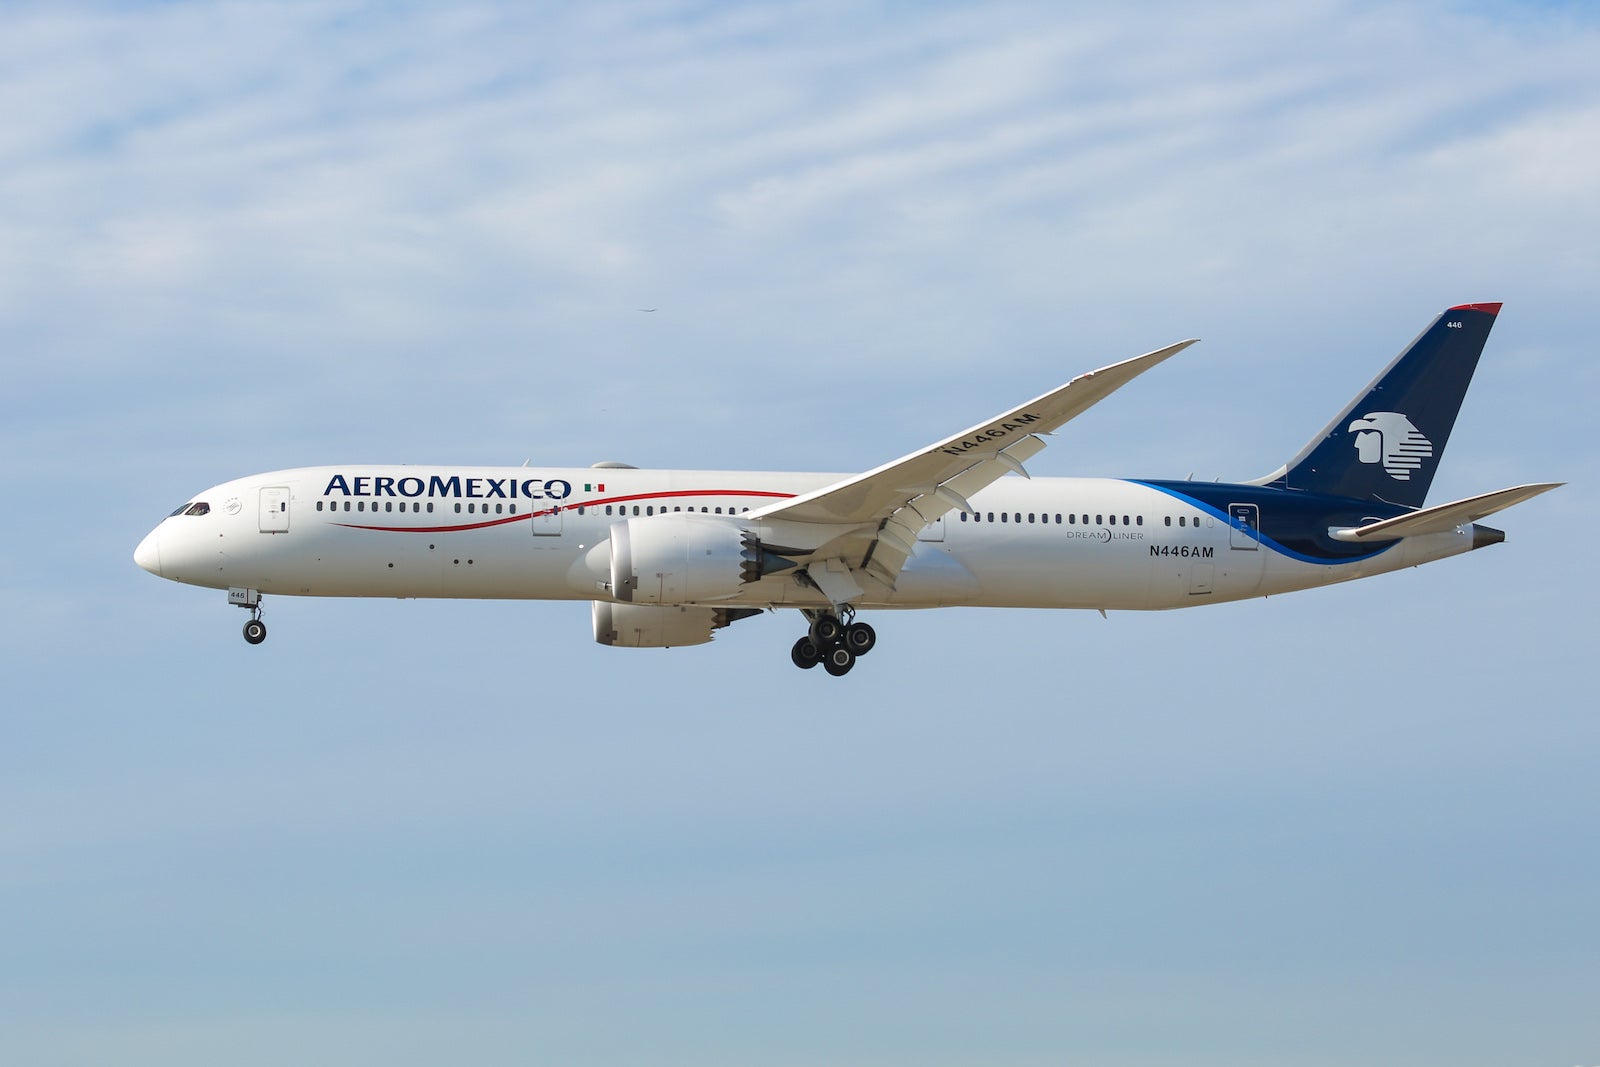 Aeromexico 787 Dreamliner landing at New York's JFK airport